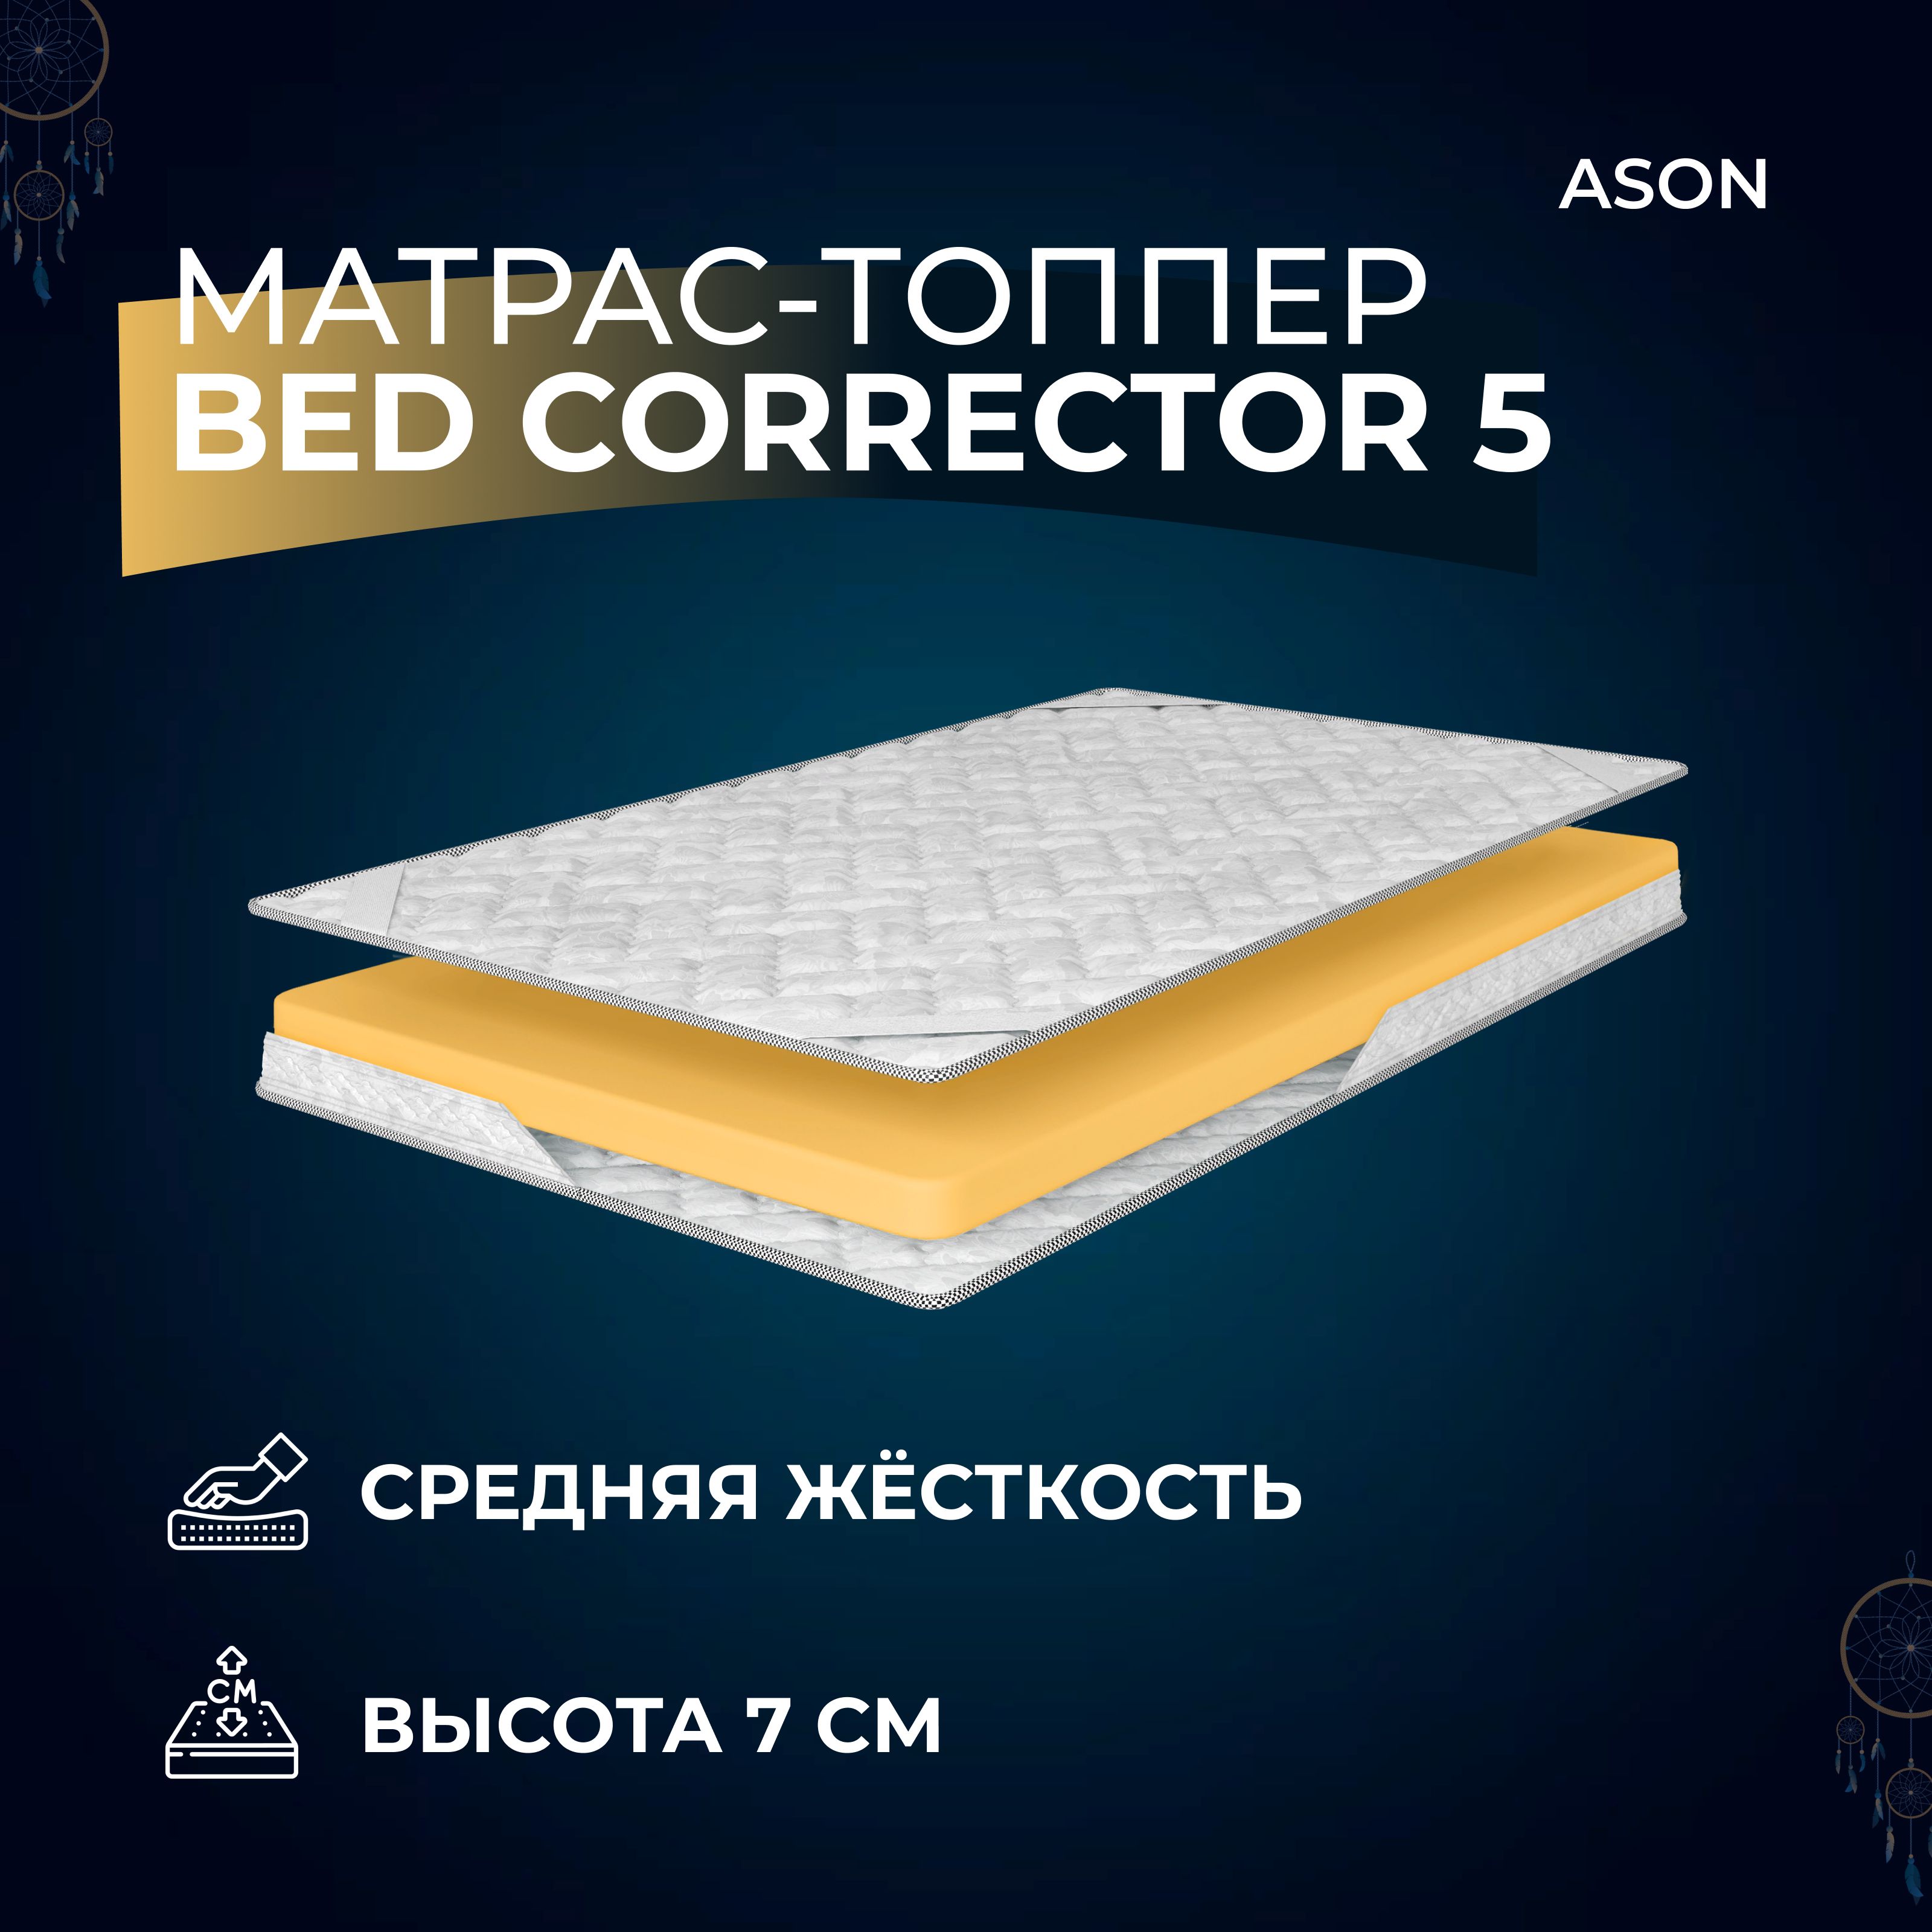 Матрас-топпер 130х200 Ason, Bed corrector 5